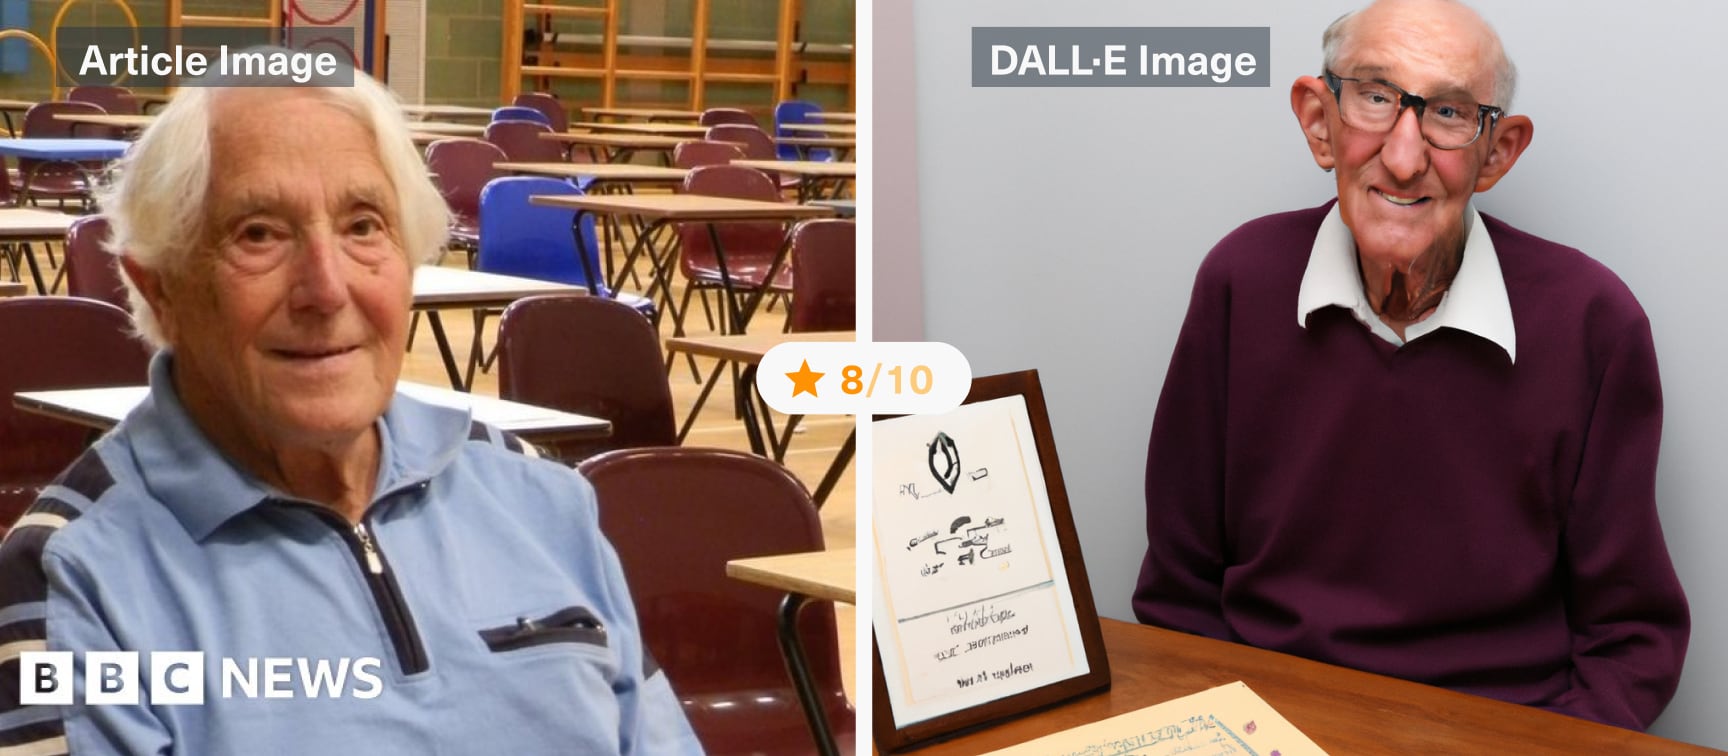 DALL-E meets News API: “Cambridgeshire man, 92, passes GCSE maths exam with top mark”